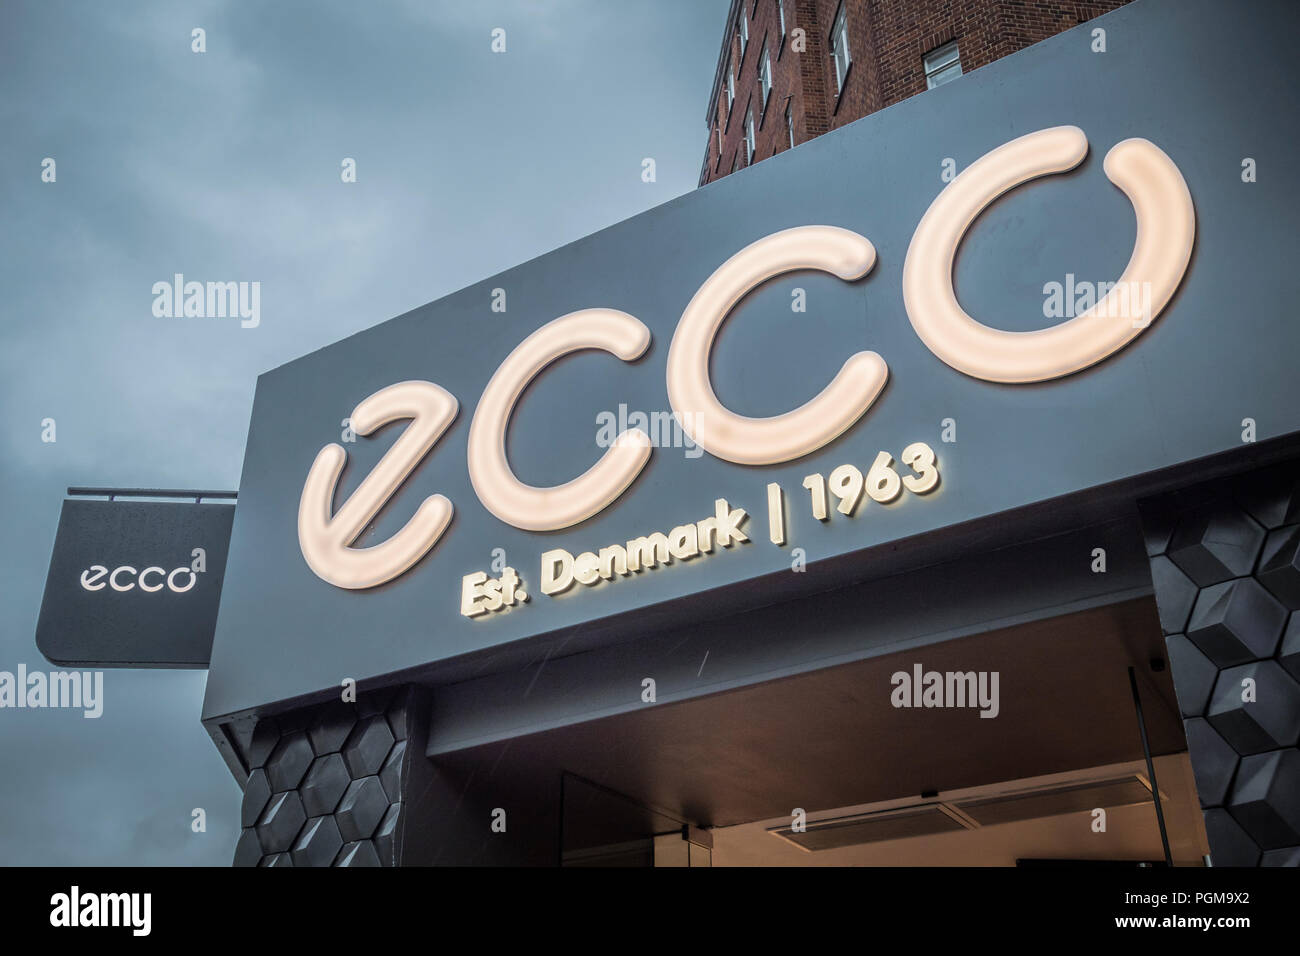 Ecco shoe shop on Road, Chelsea, London SW3 Stock Photo - Alamy